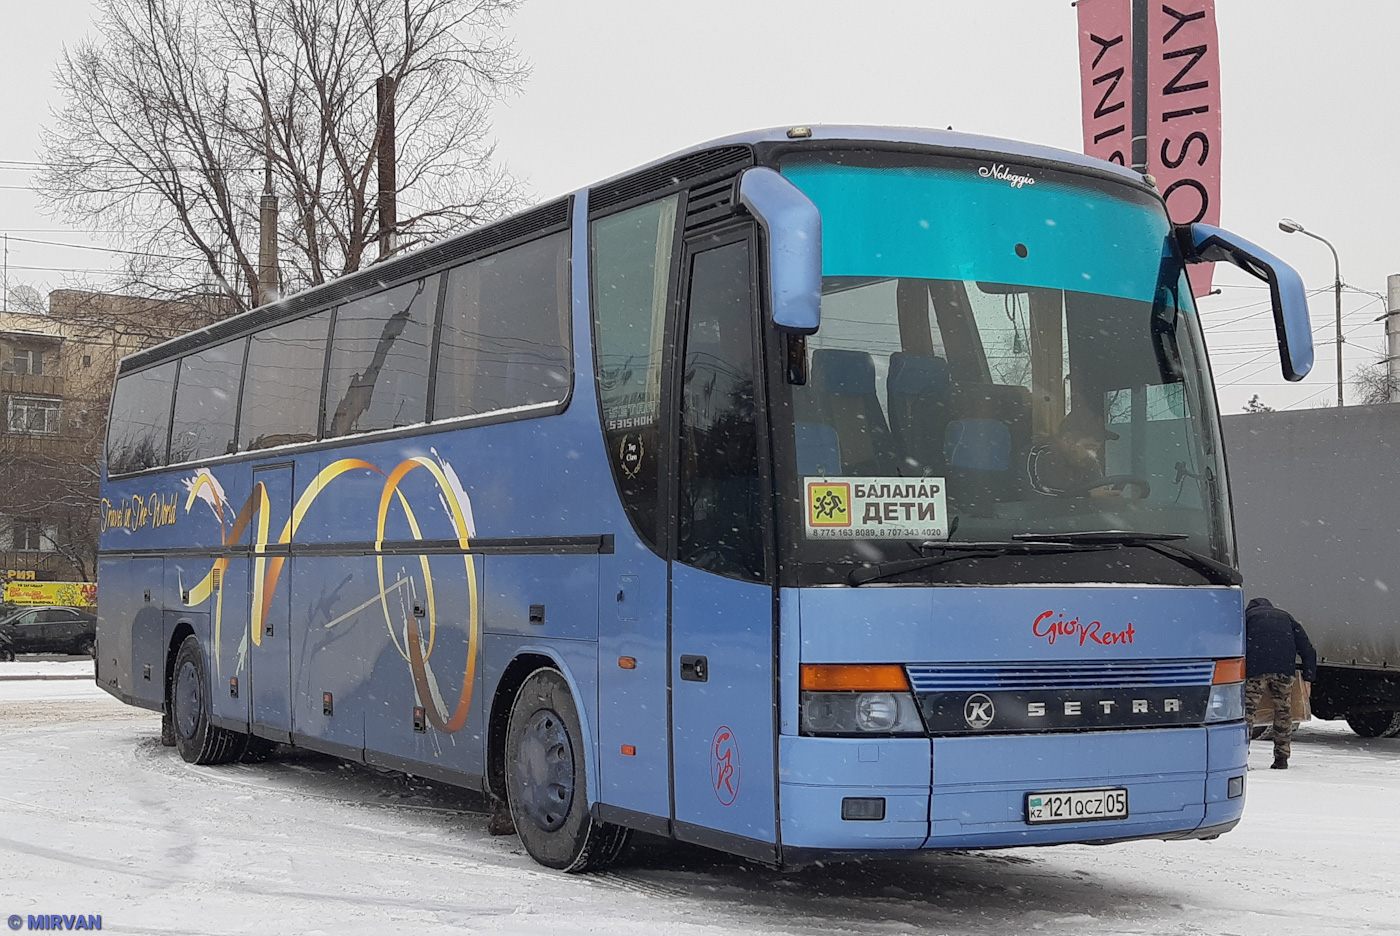 Almaty, Setra S315HDH/2 № 121 QCZ 05